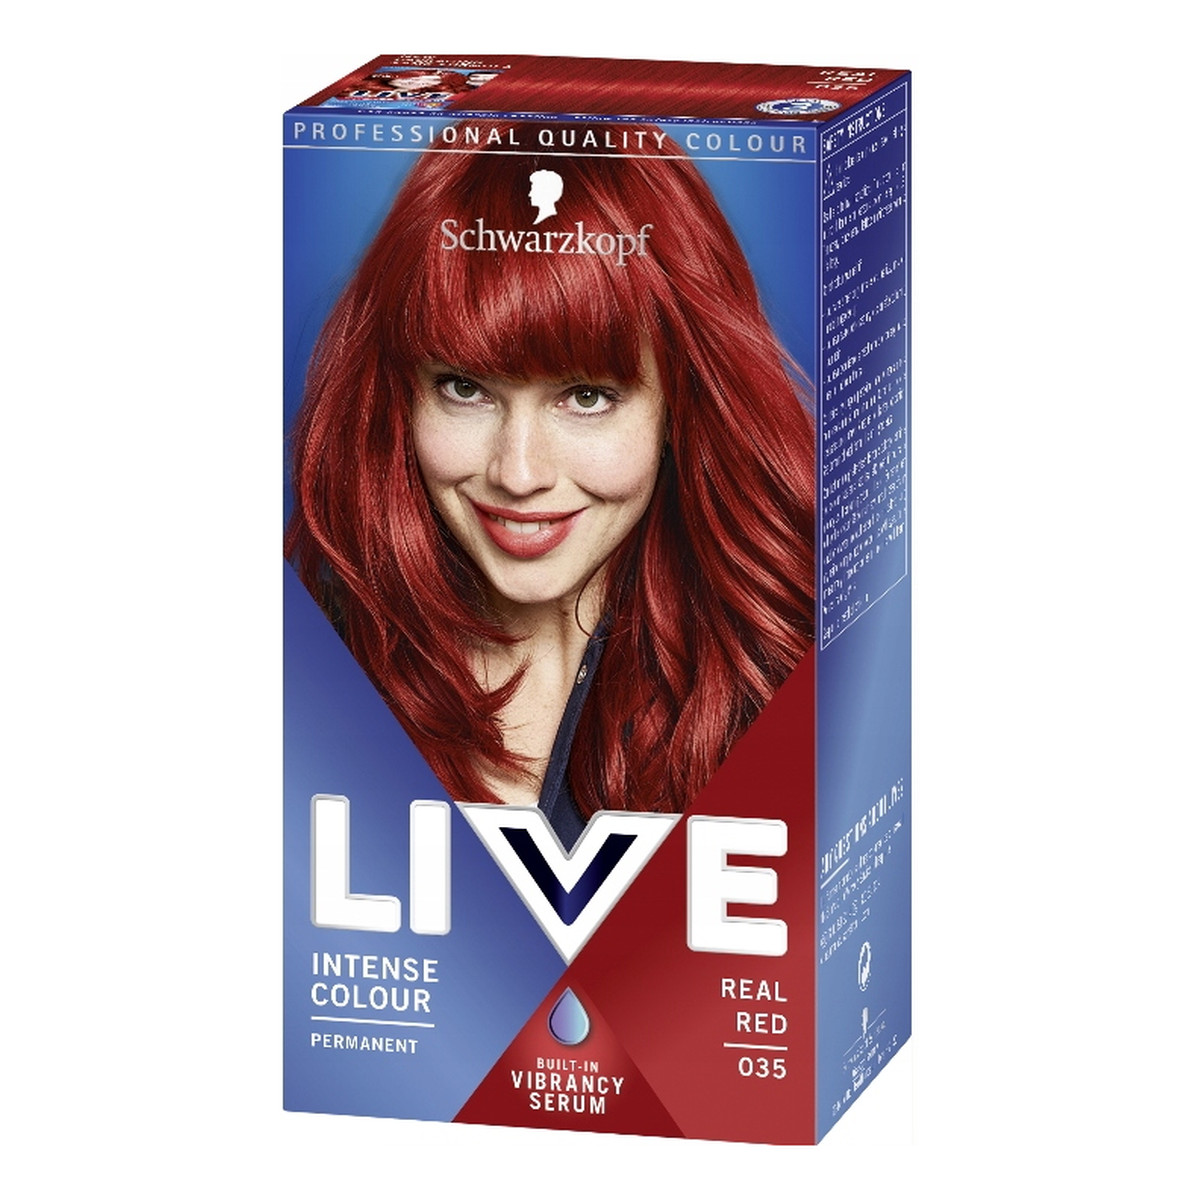 Schwarzkopf Live intense colour farba do włosów 035 real red